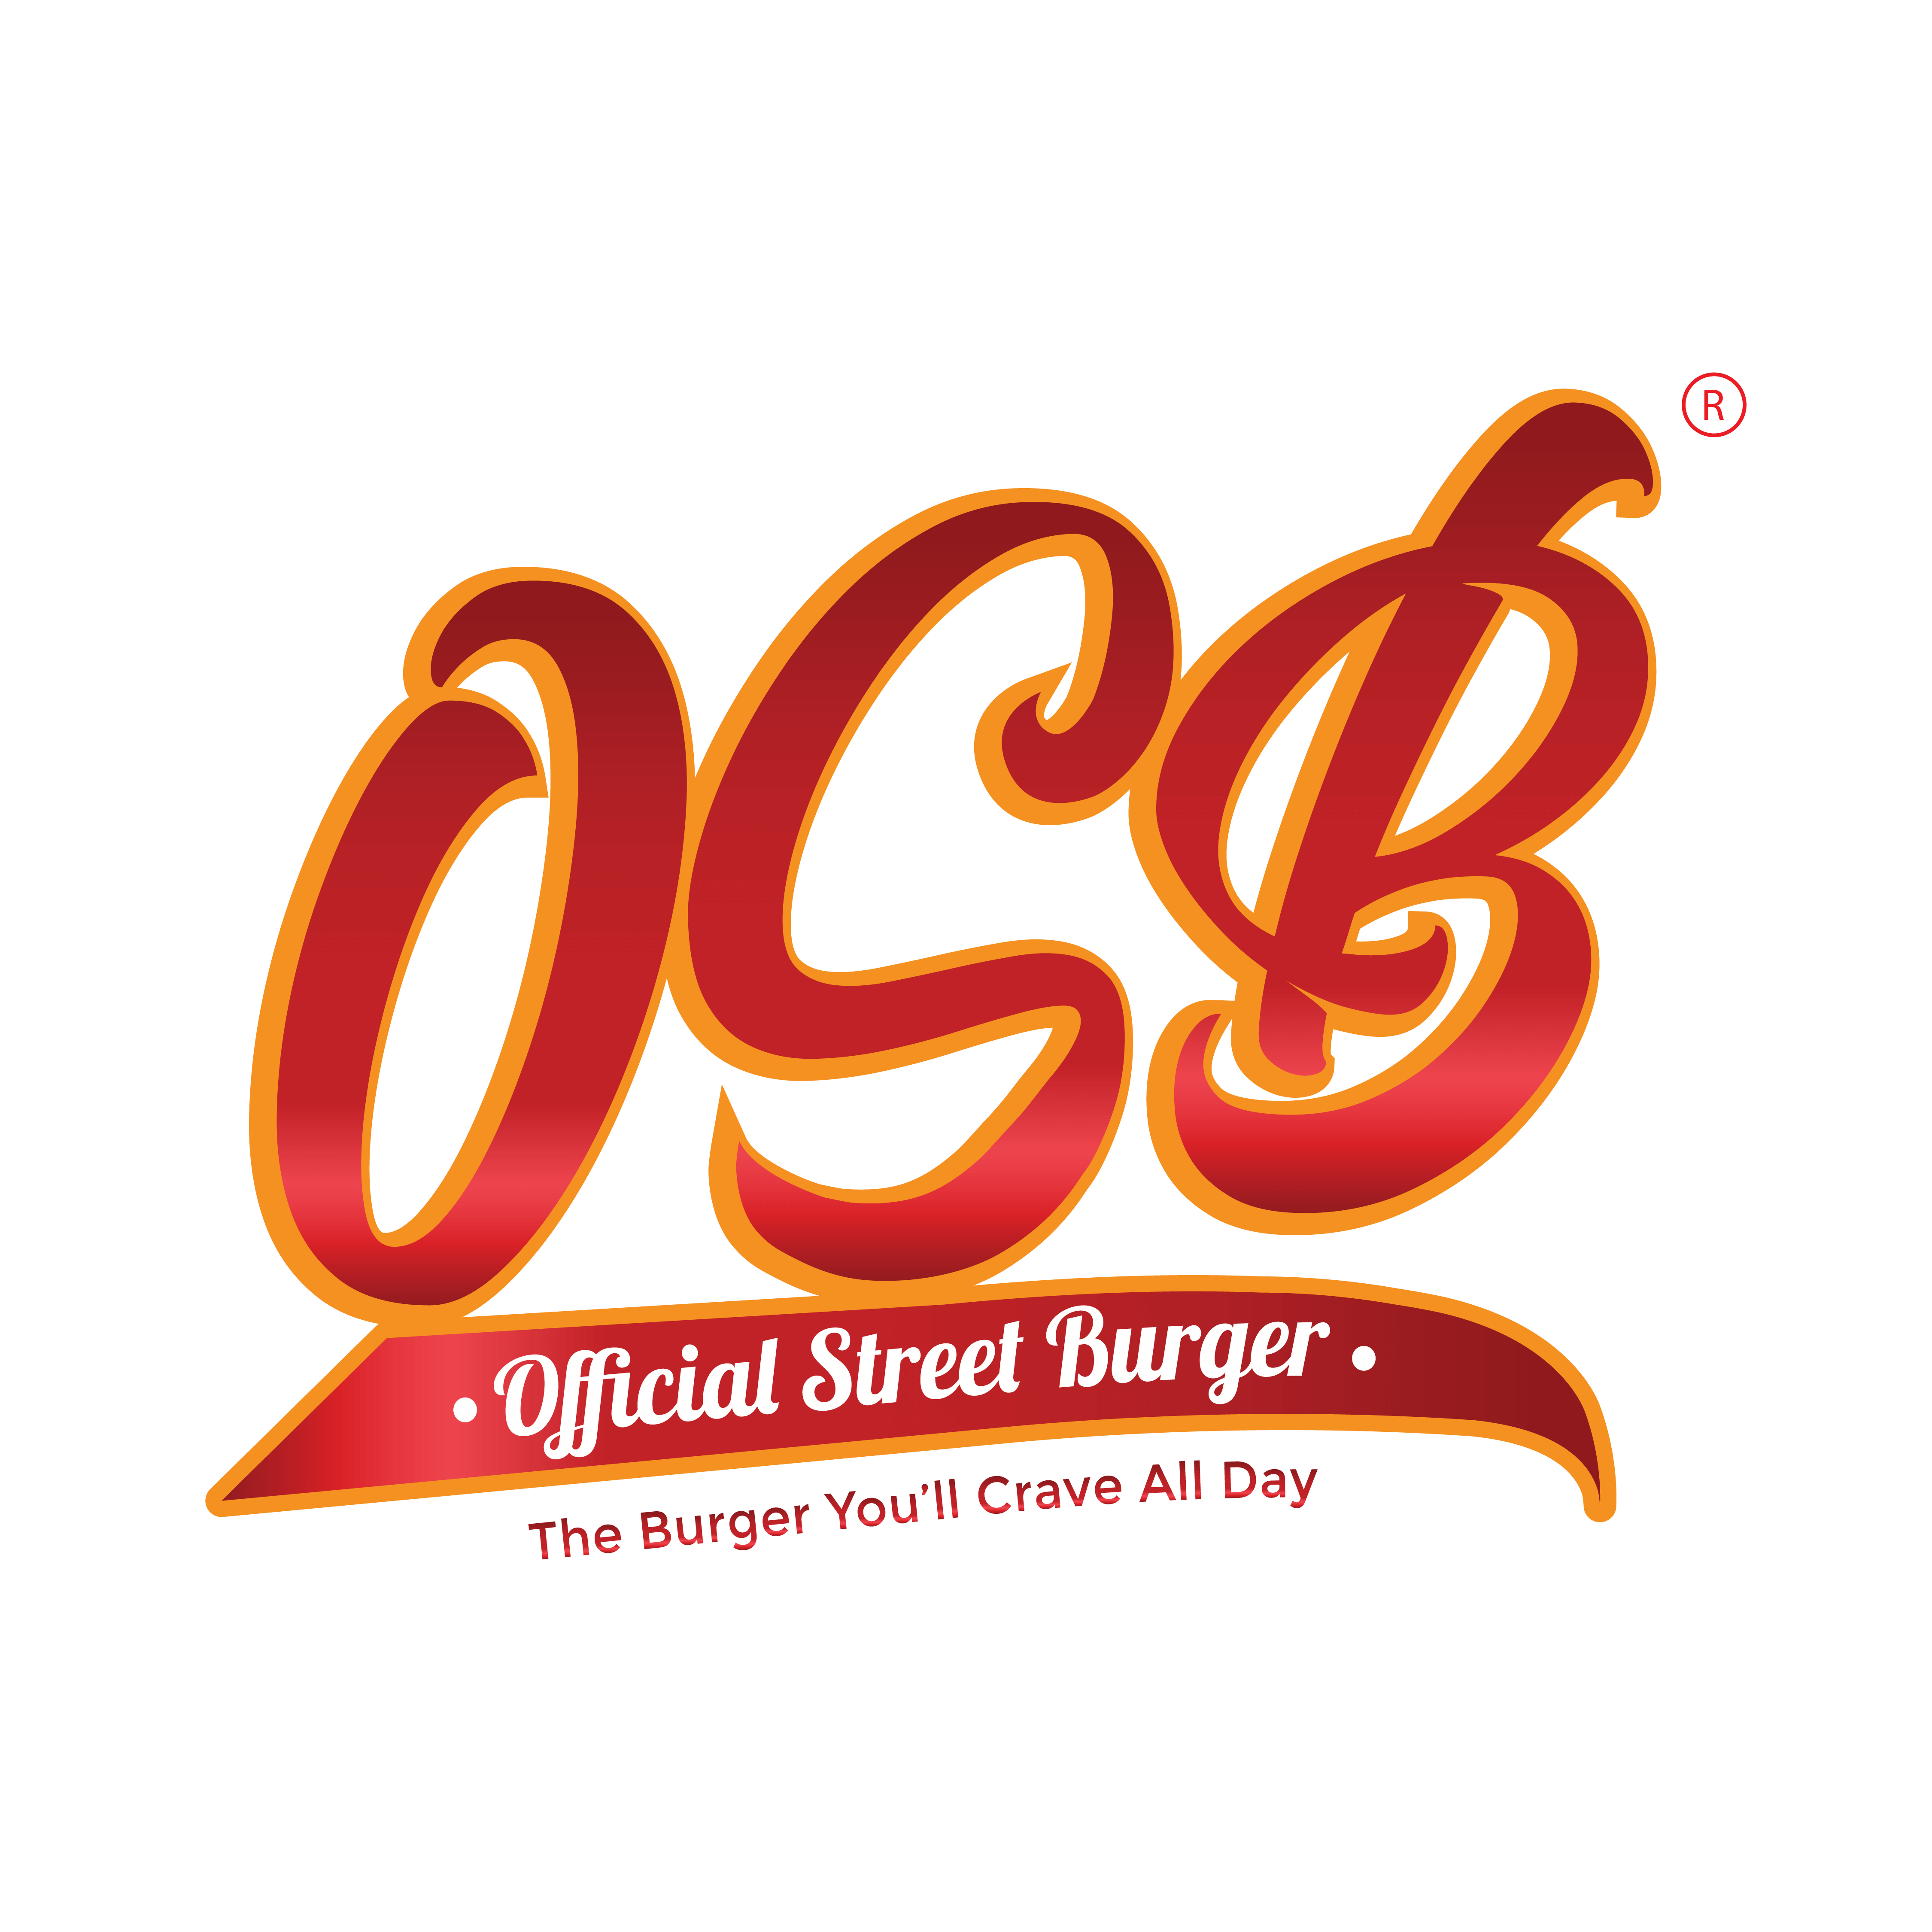 Official Street Burgers